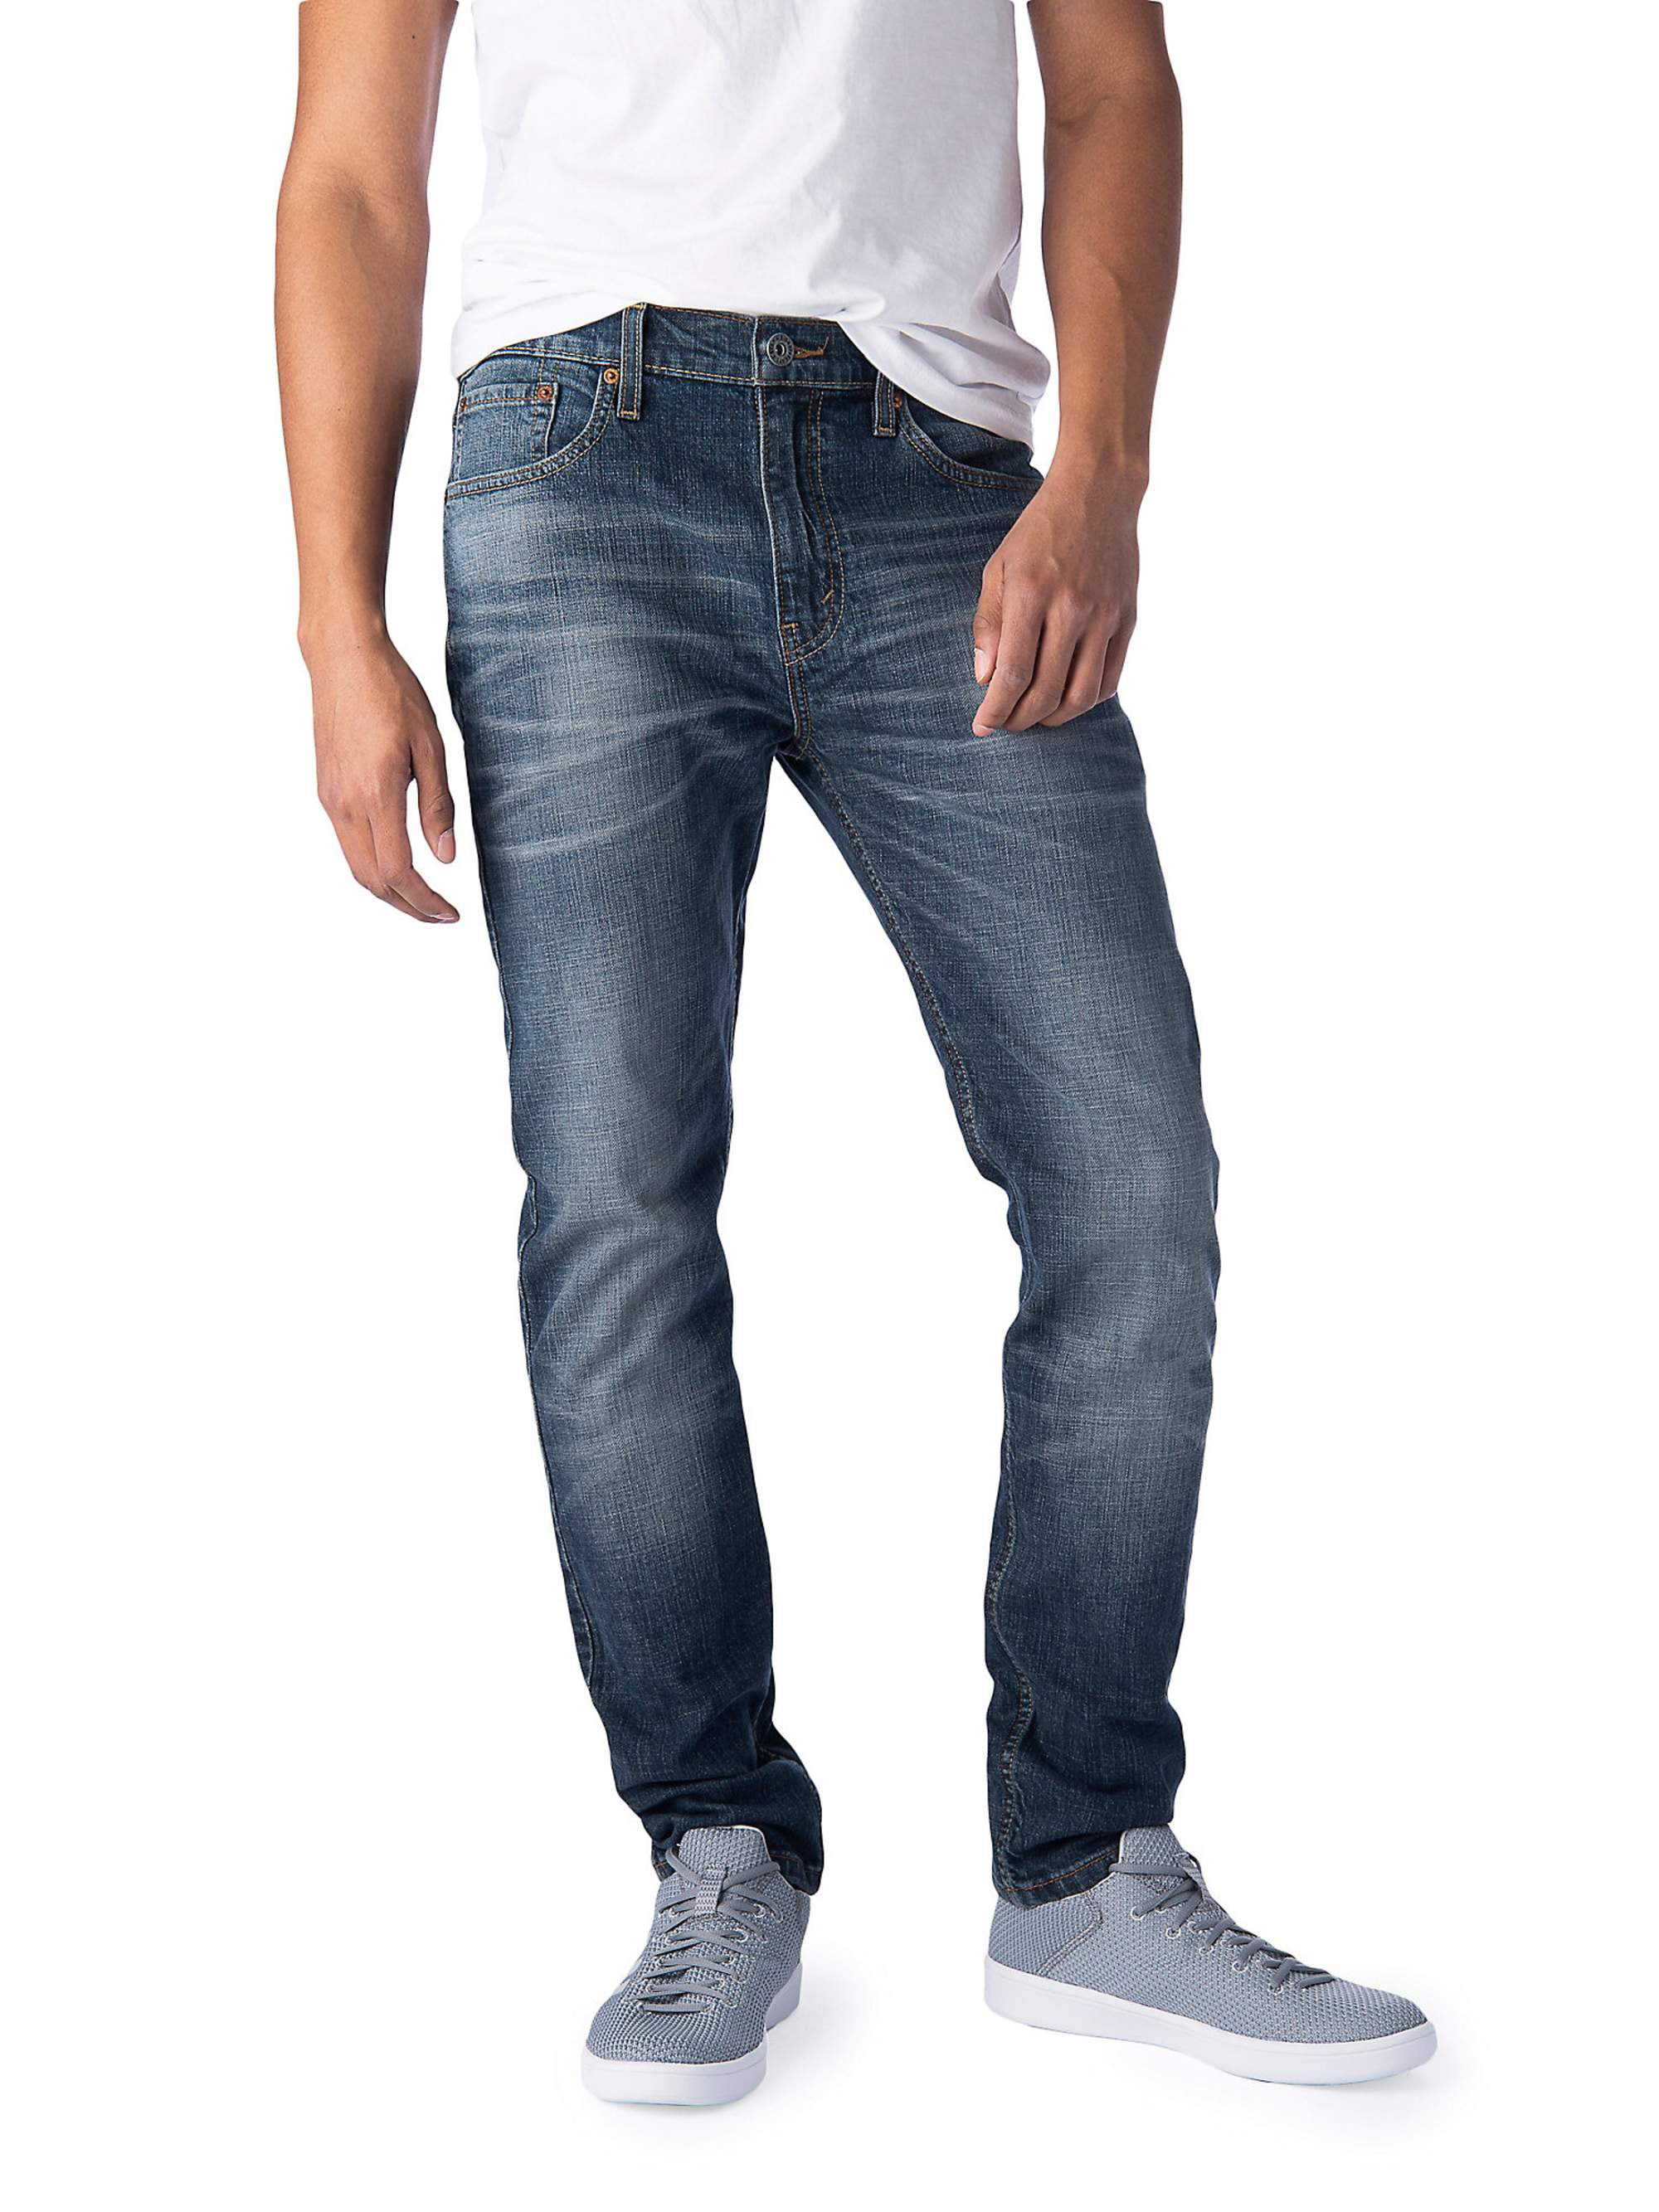 Levi Strauss \u0026 Co. Men's Slim Fit Jeans 